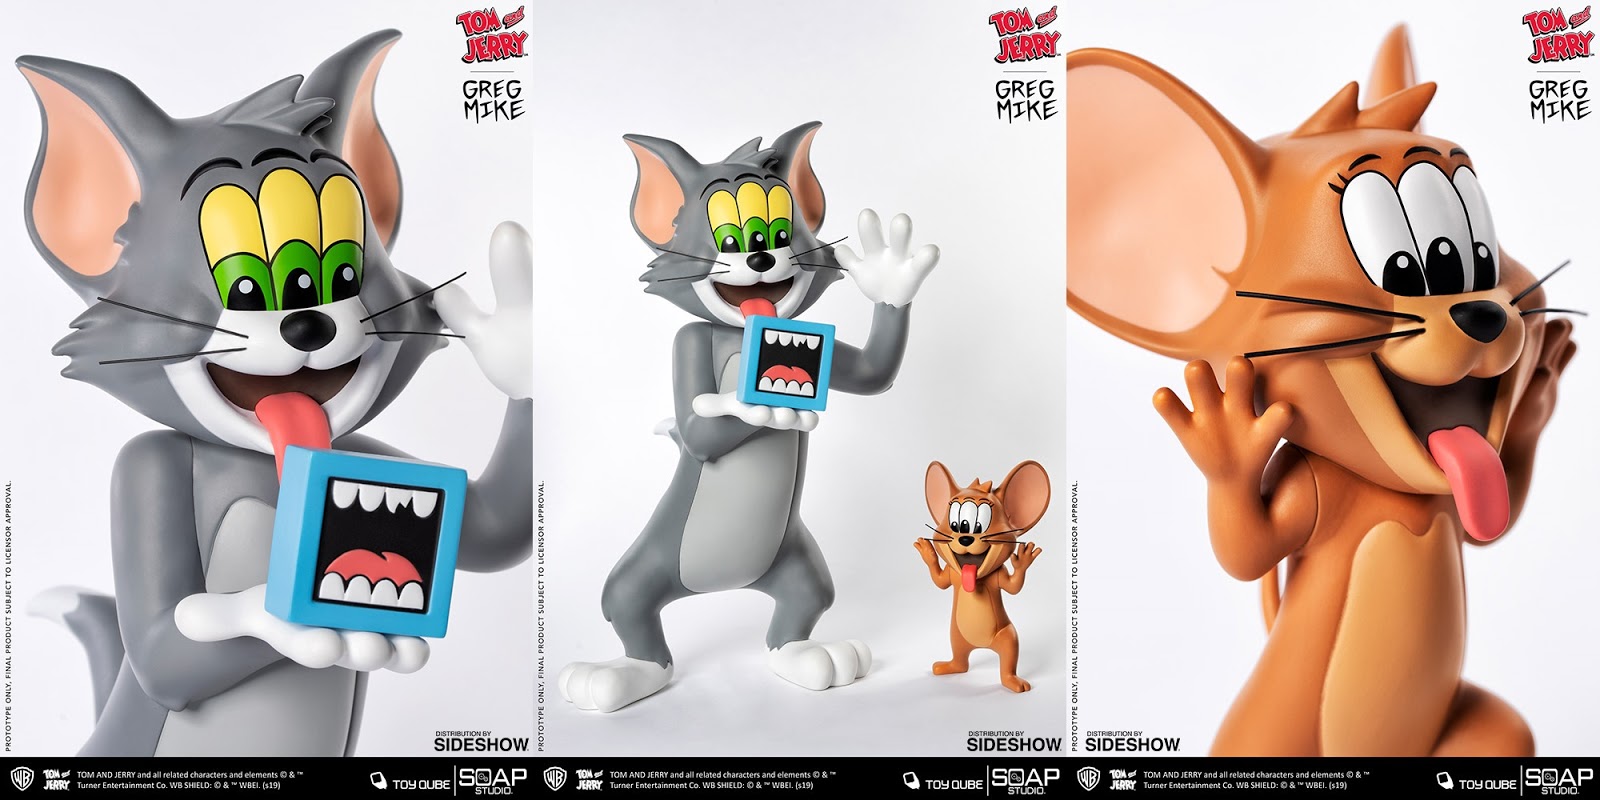 🙀 MORE Tom & Jerry?! Cartoon - Pacific Licensing Studio